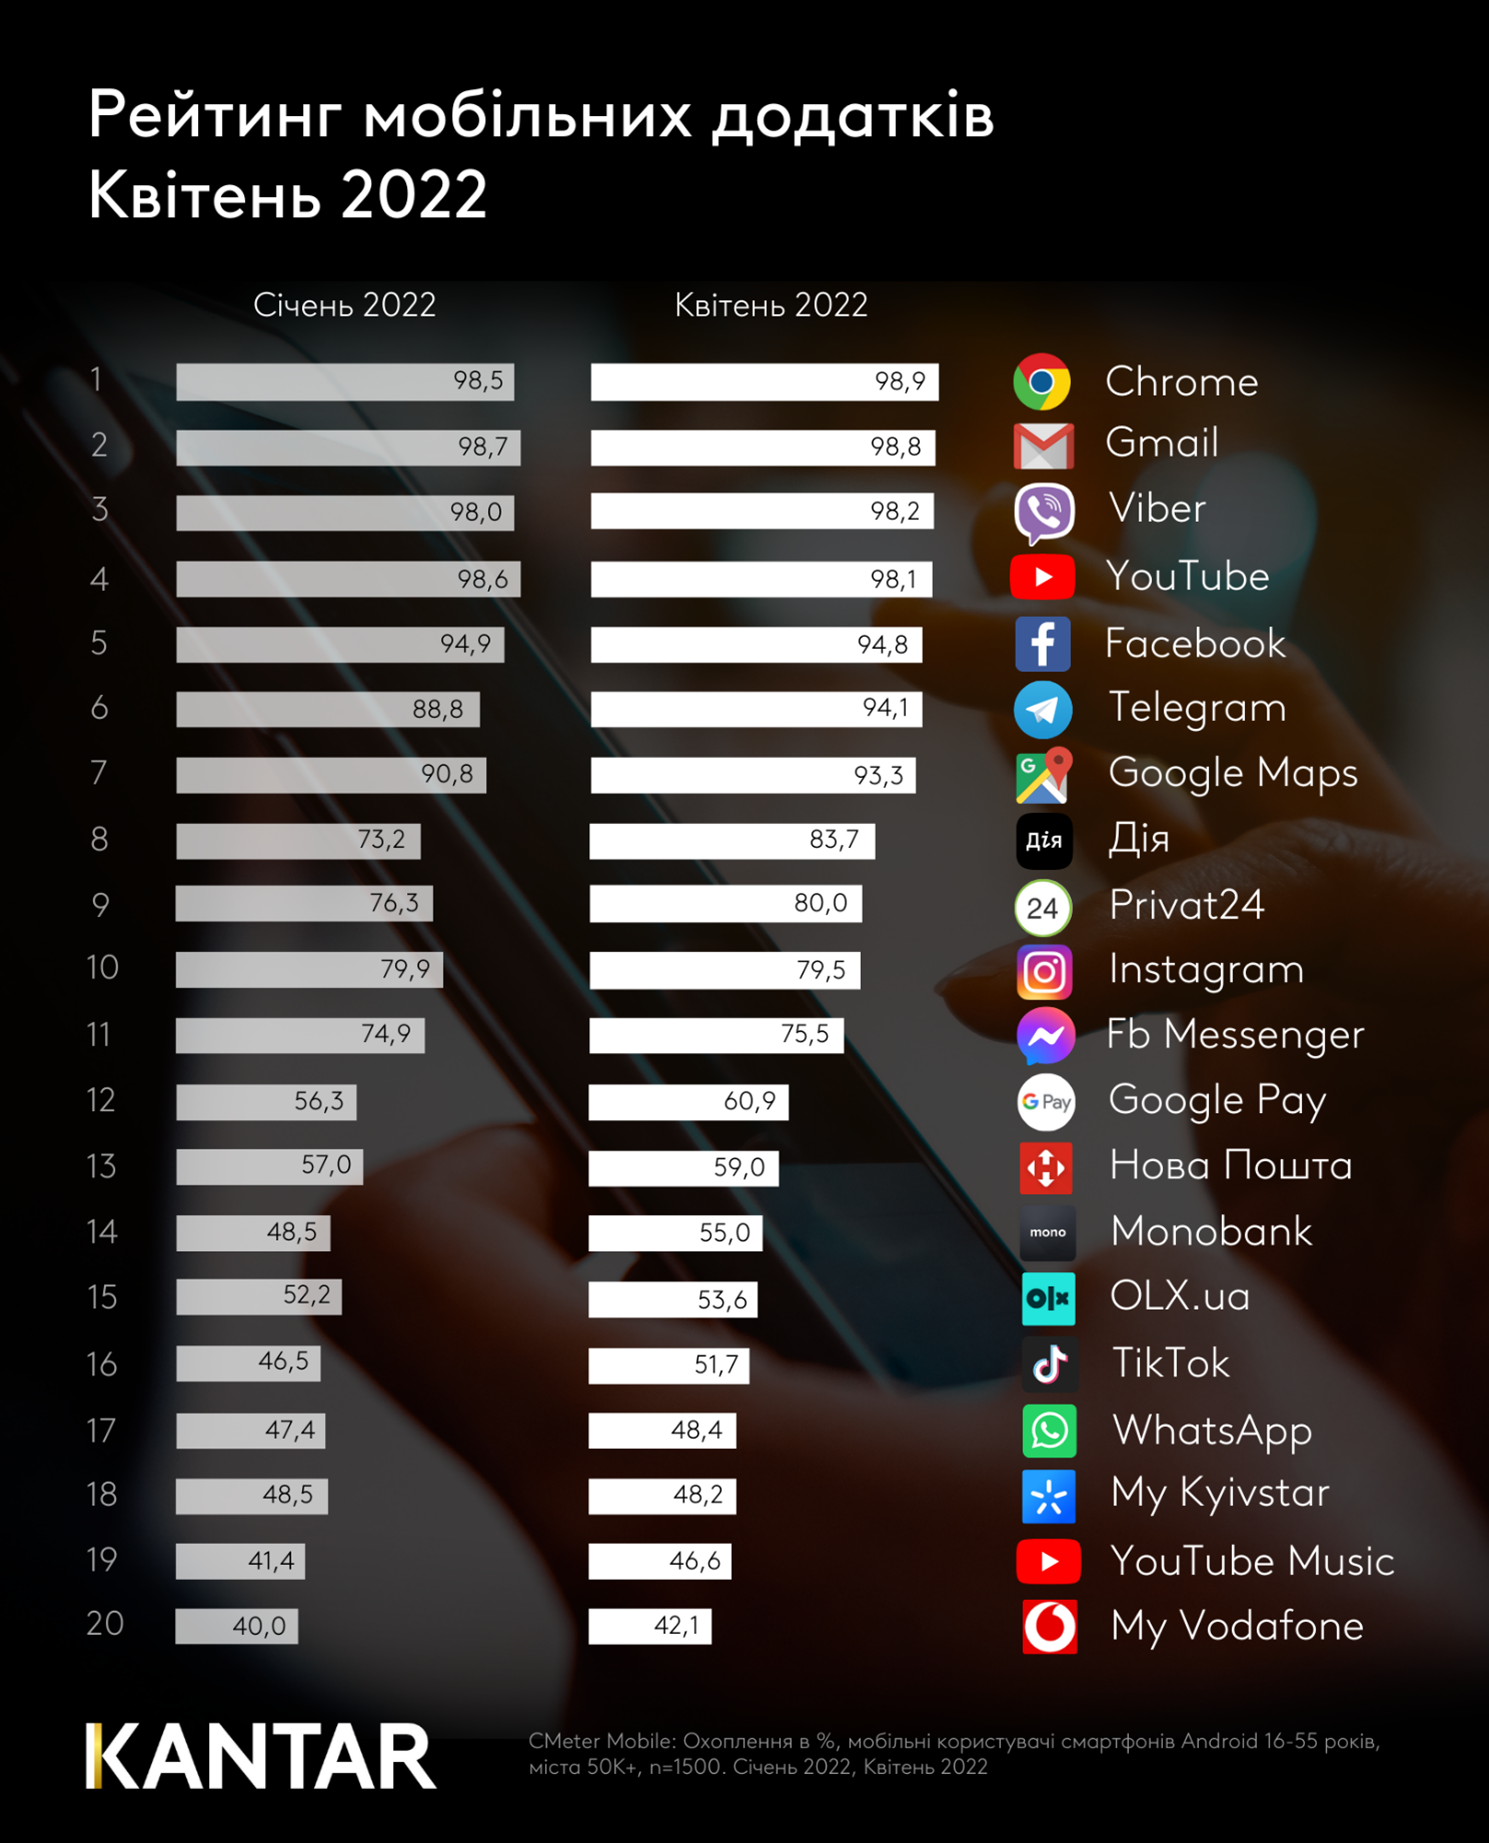 The most popular apps April 2022 Kantar Ukraine